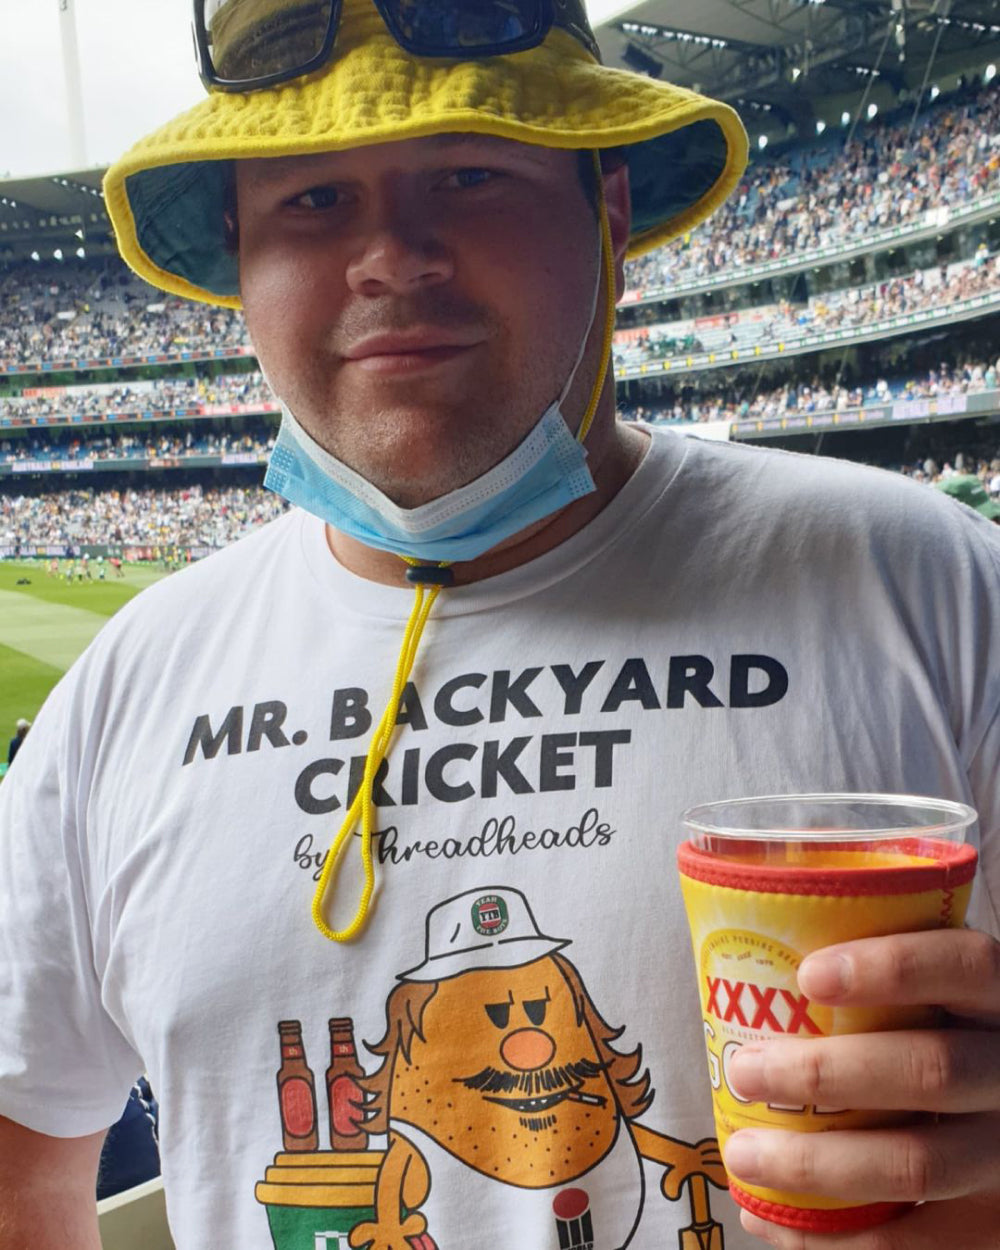 The Backyard Cricketer T-Shirt